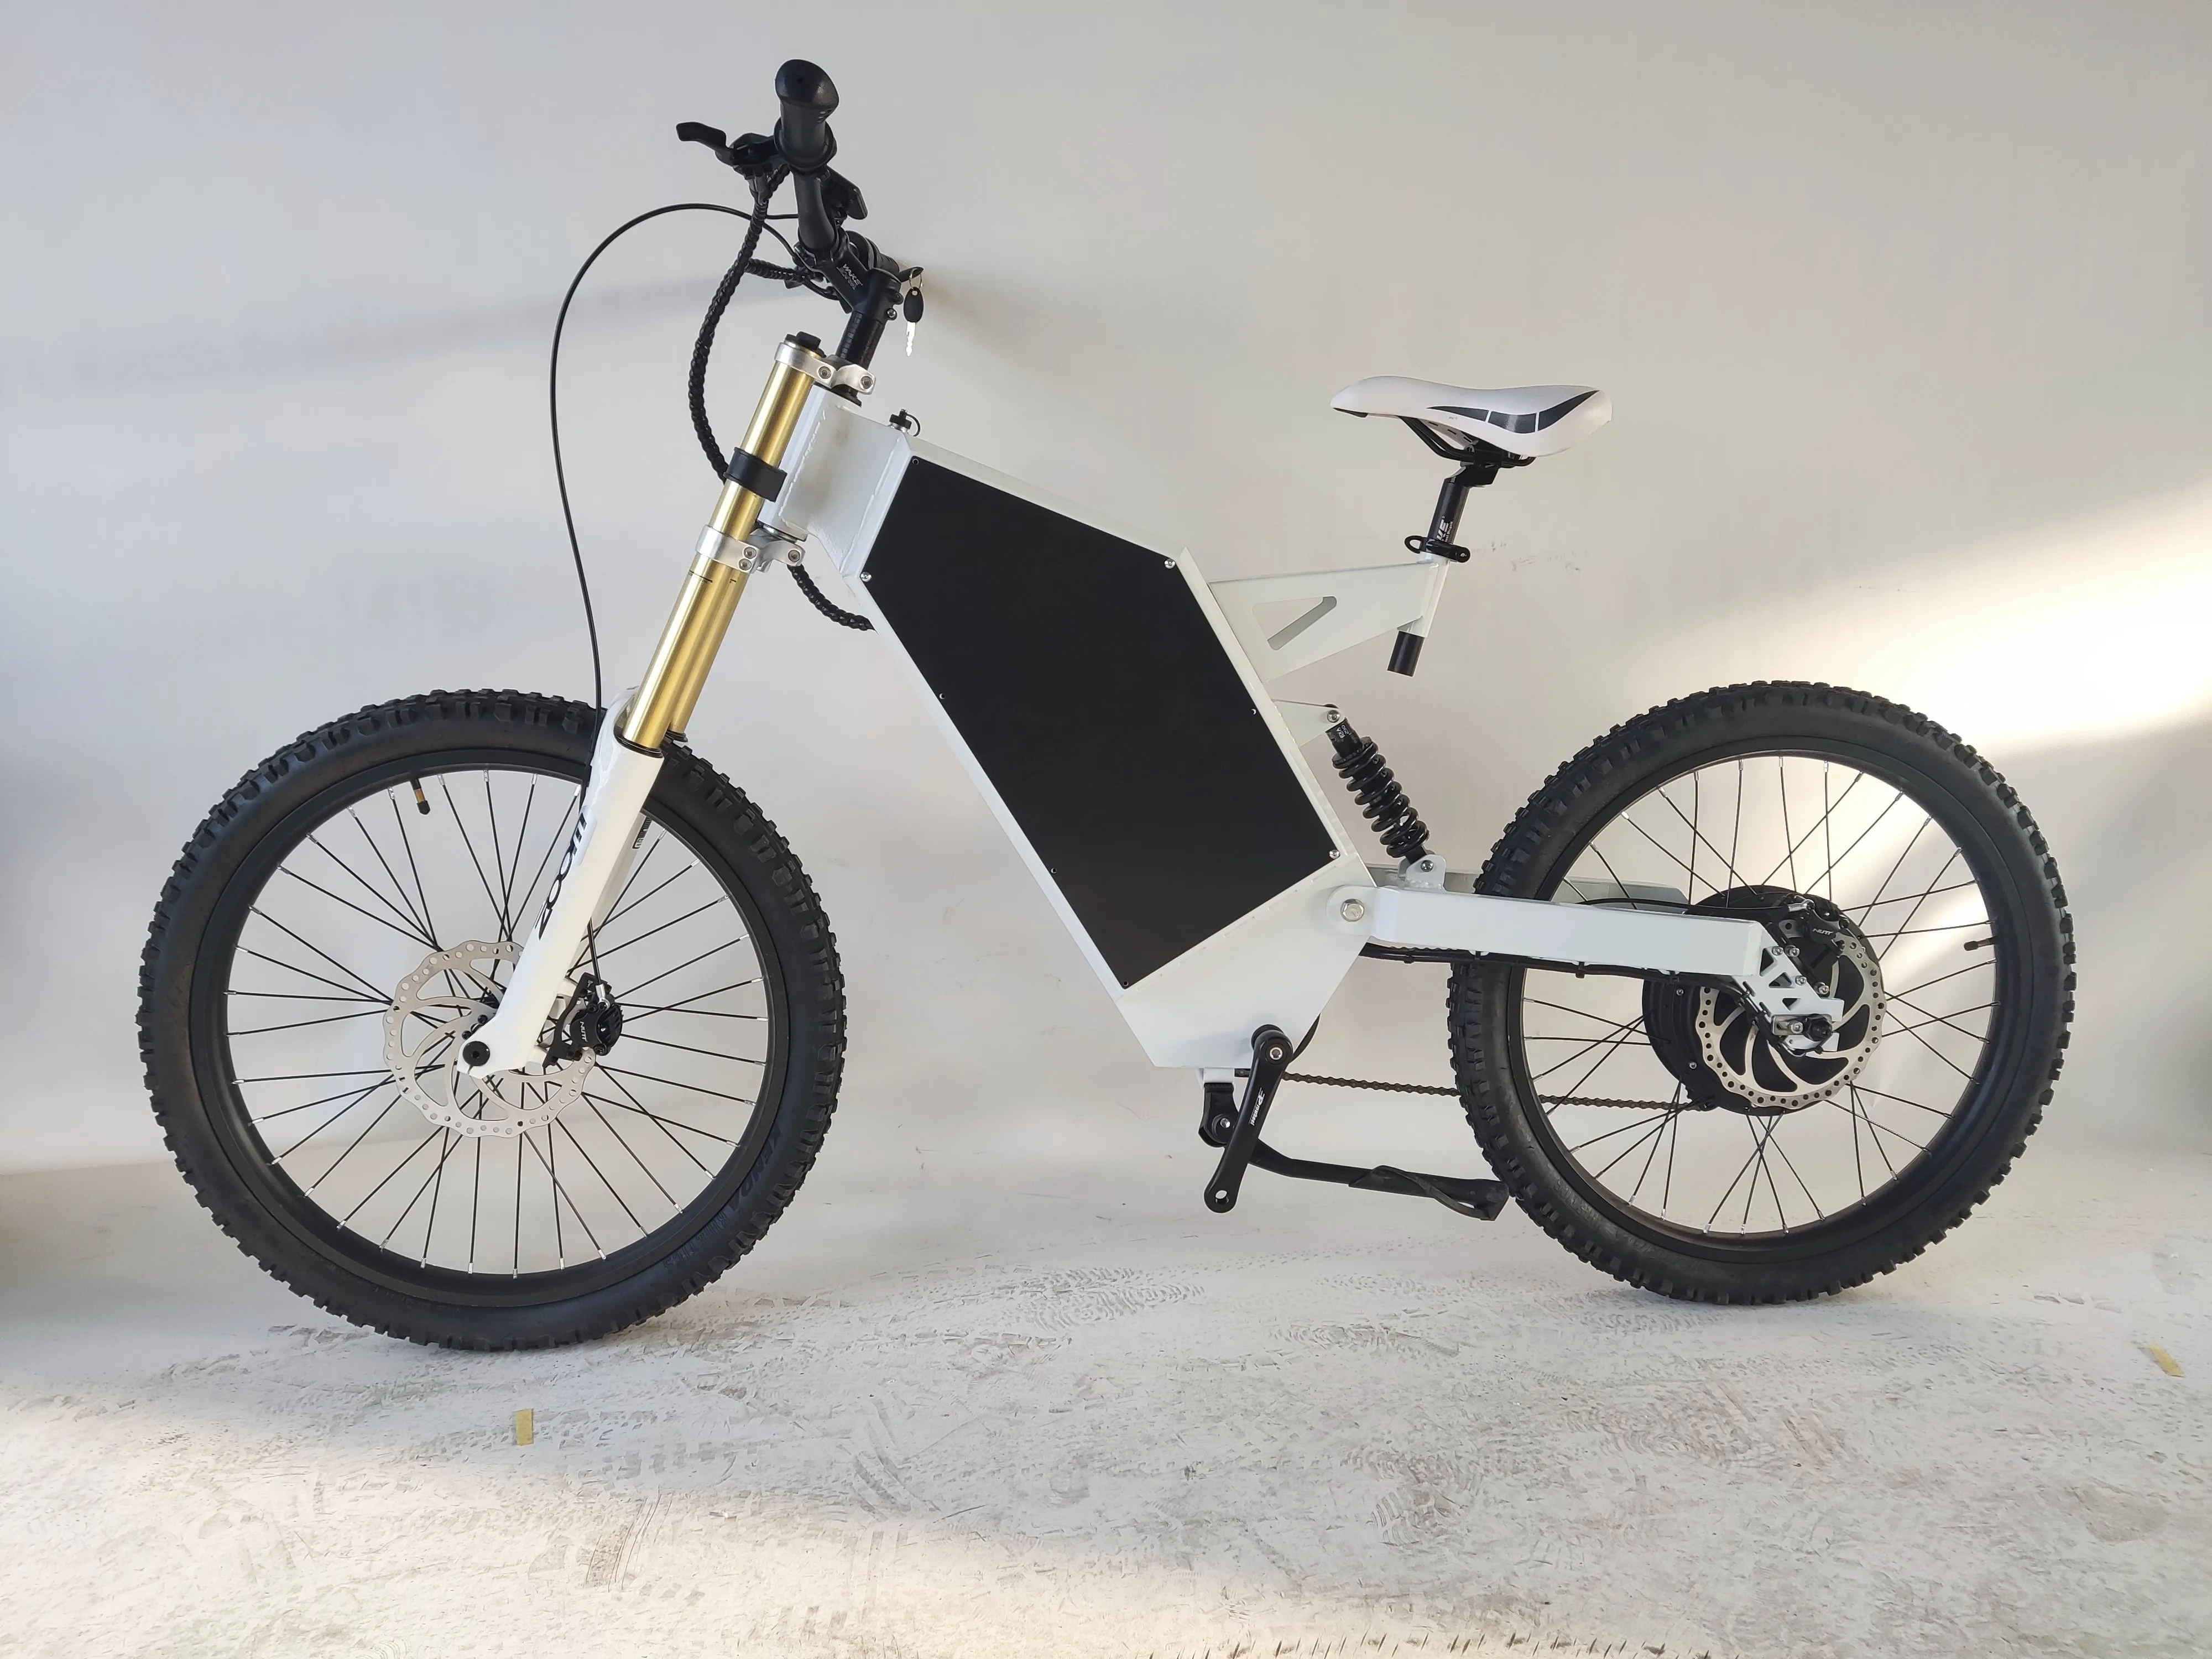 8000w 72v Adult Electric Off Road Dirt Bike Bomber Mountain Ebike Fast 60  MPH+